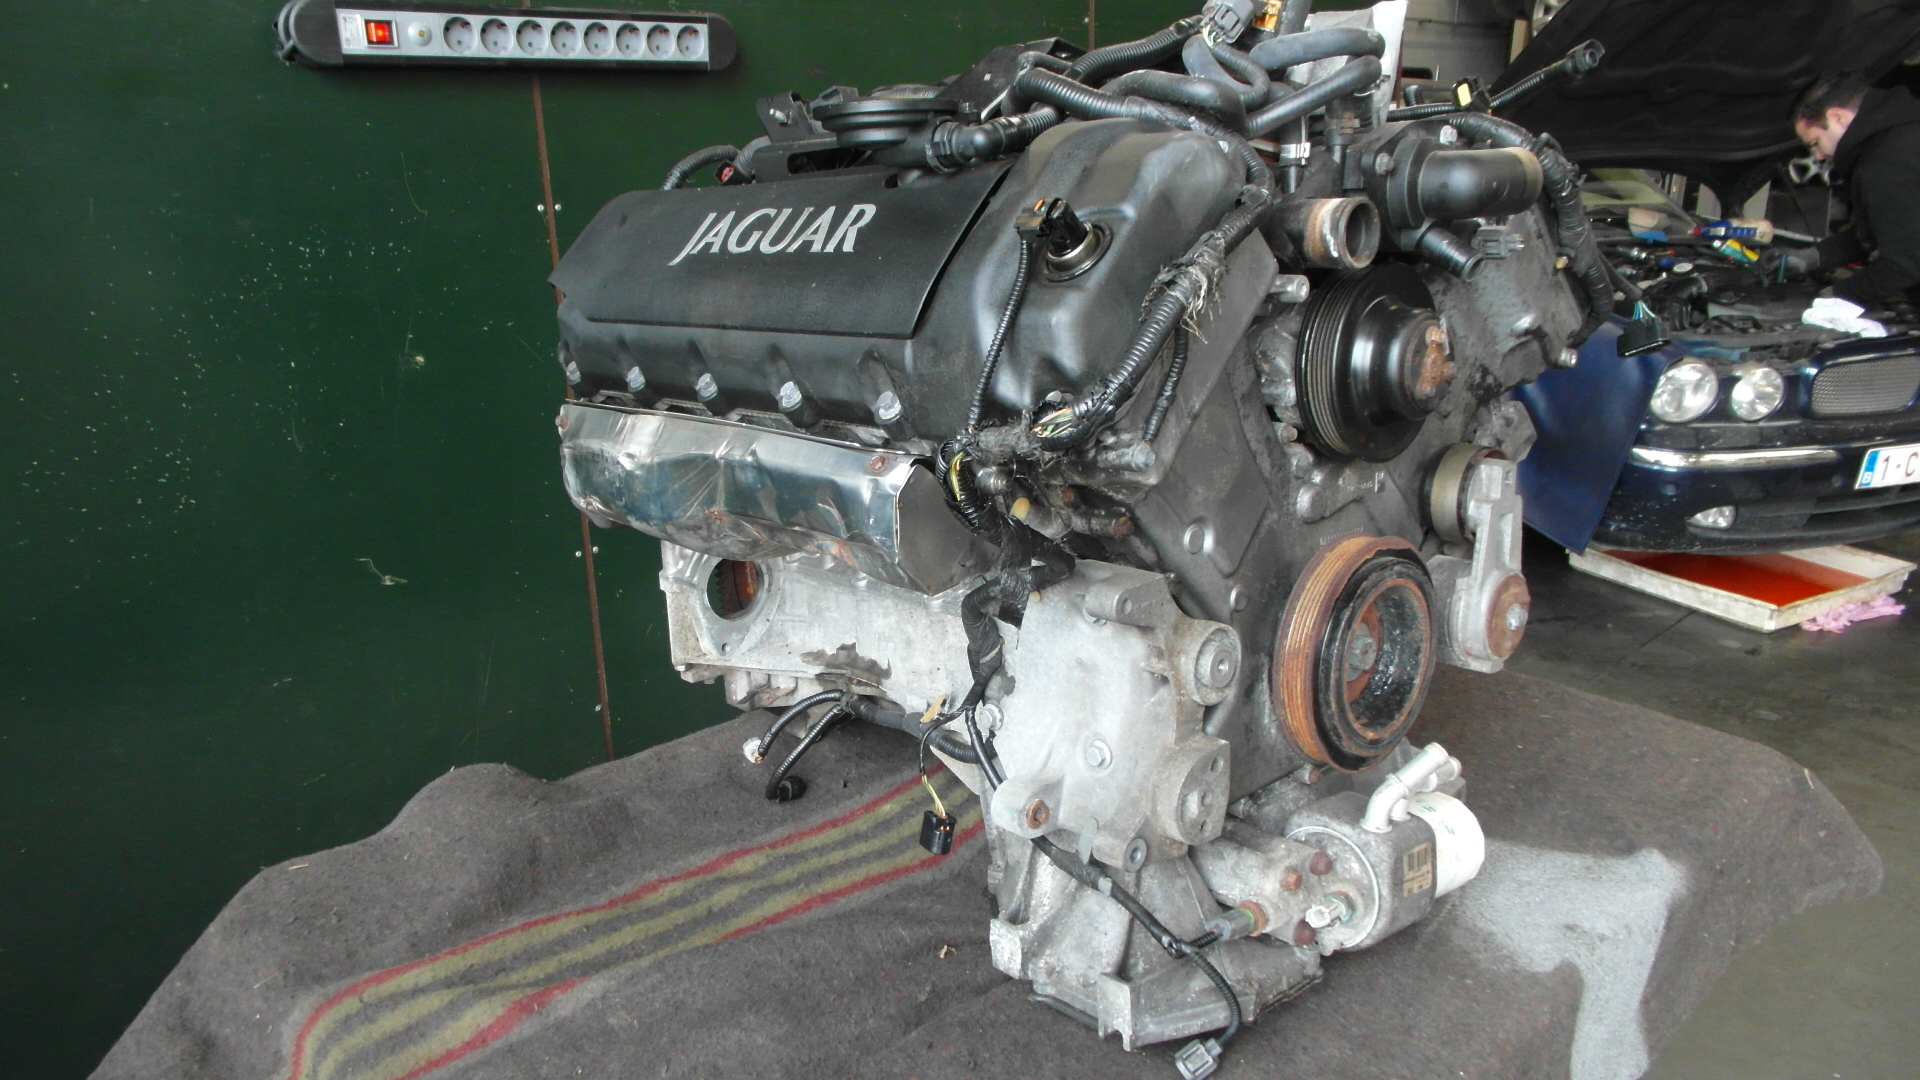  Jaguar motor  4 2 v8 AJ82256 Exco Auto s